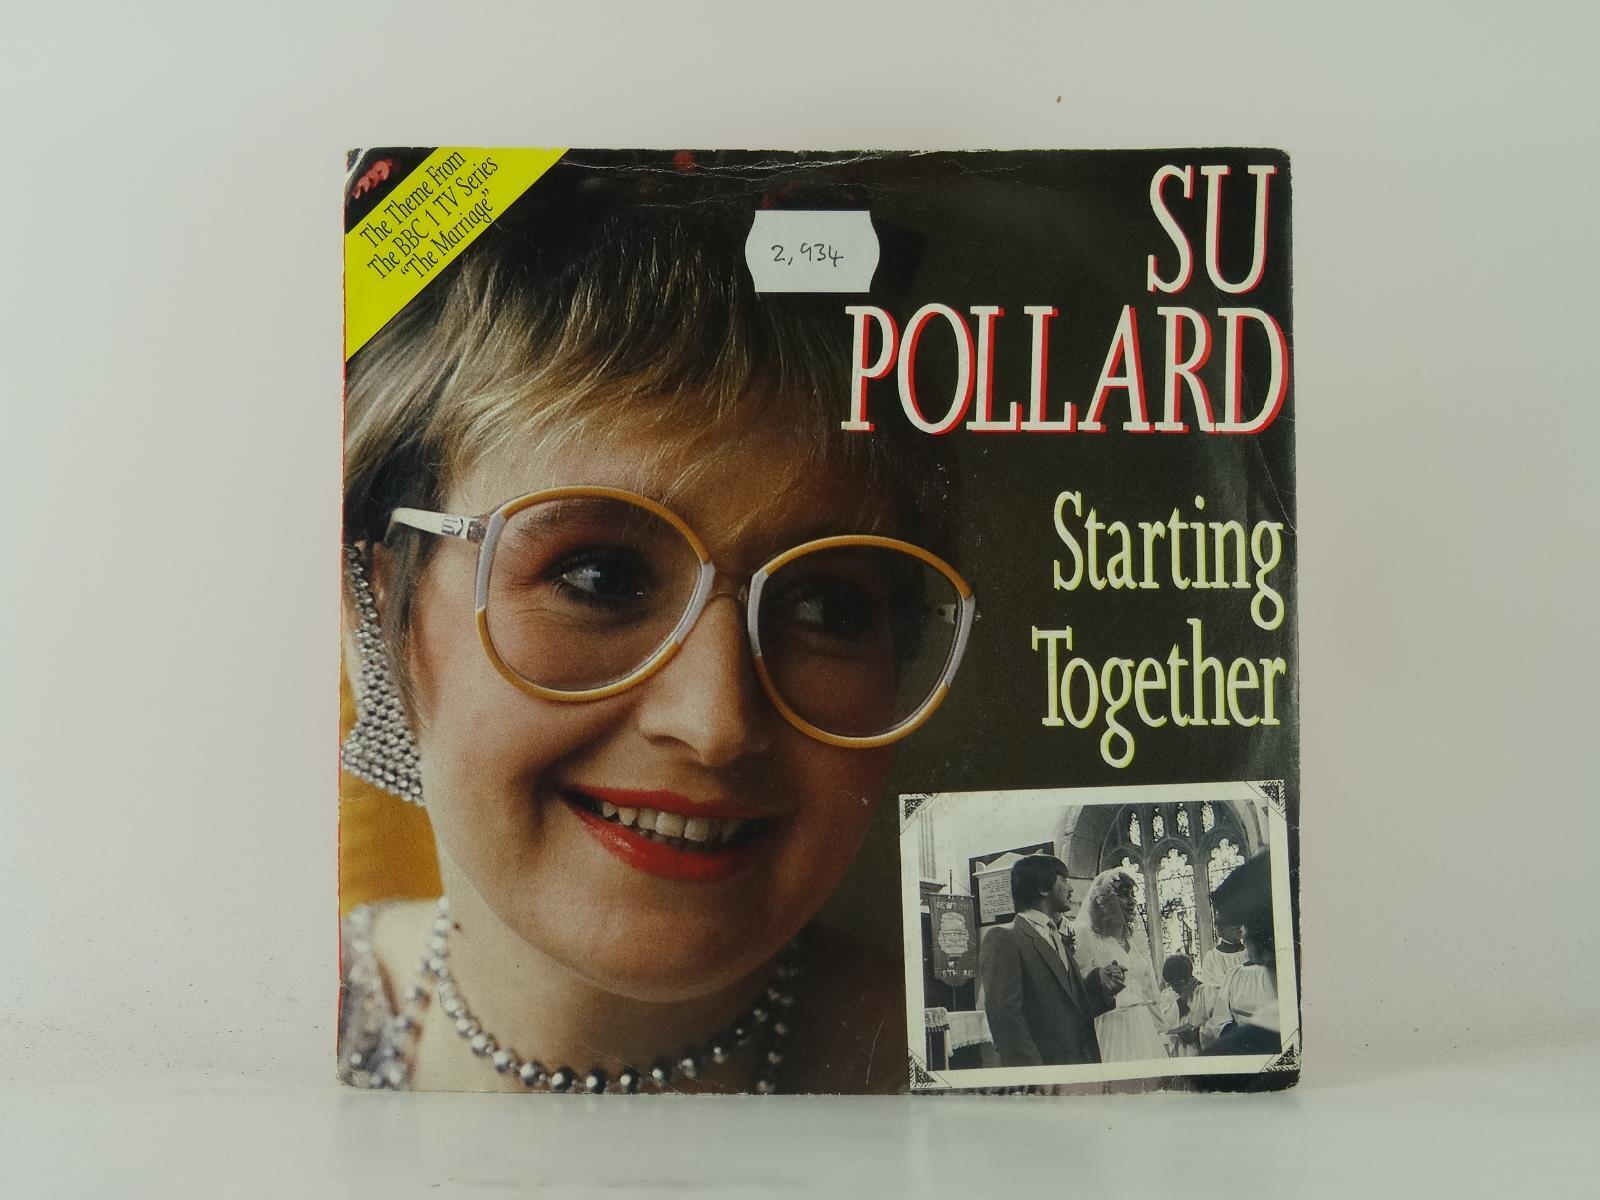 SU POLLARD STARTING TOGETHER (4) (37) 2 Track 7" Single Picture Sleeve RAINBOW R